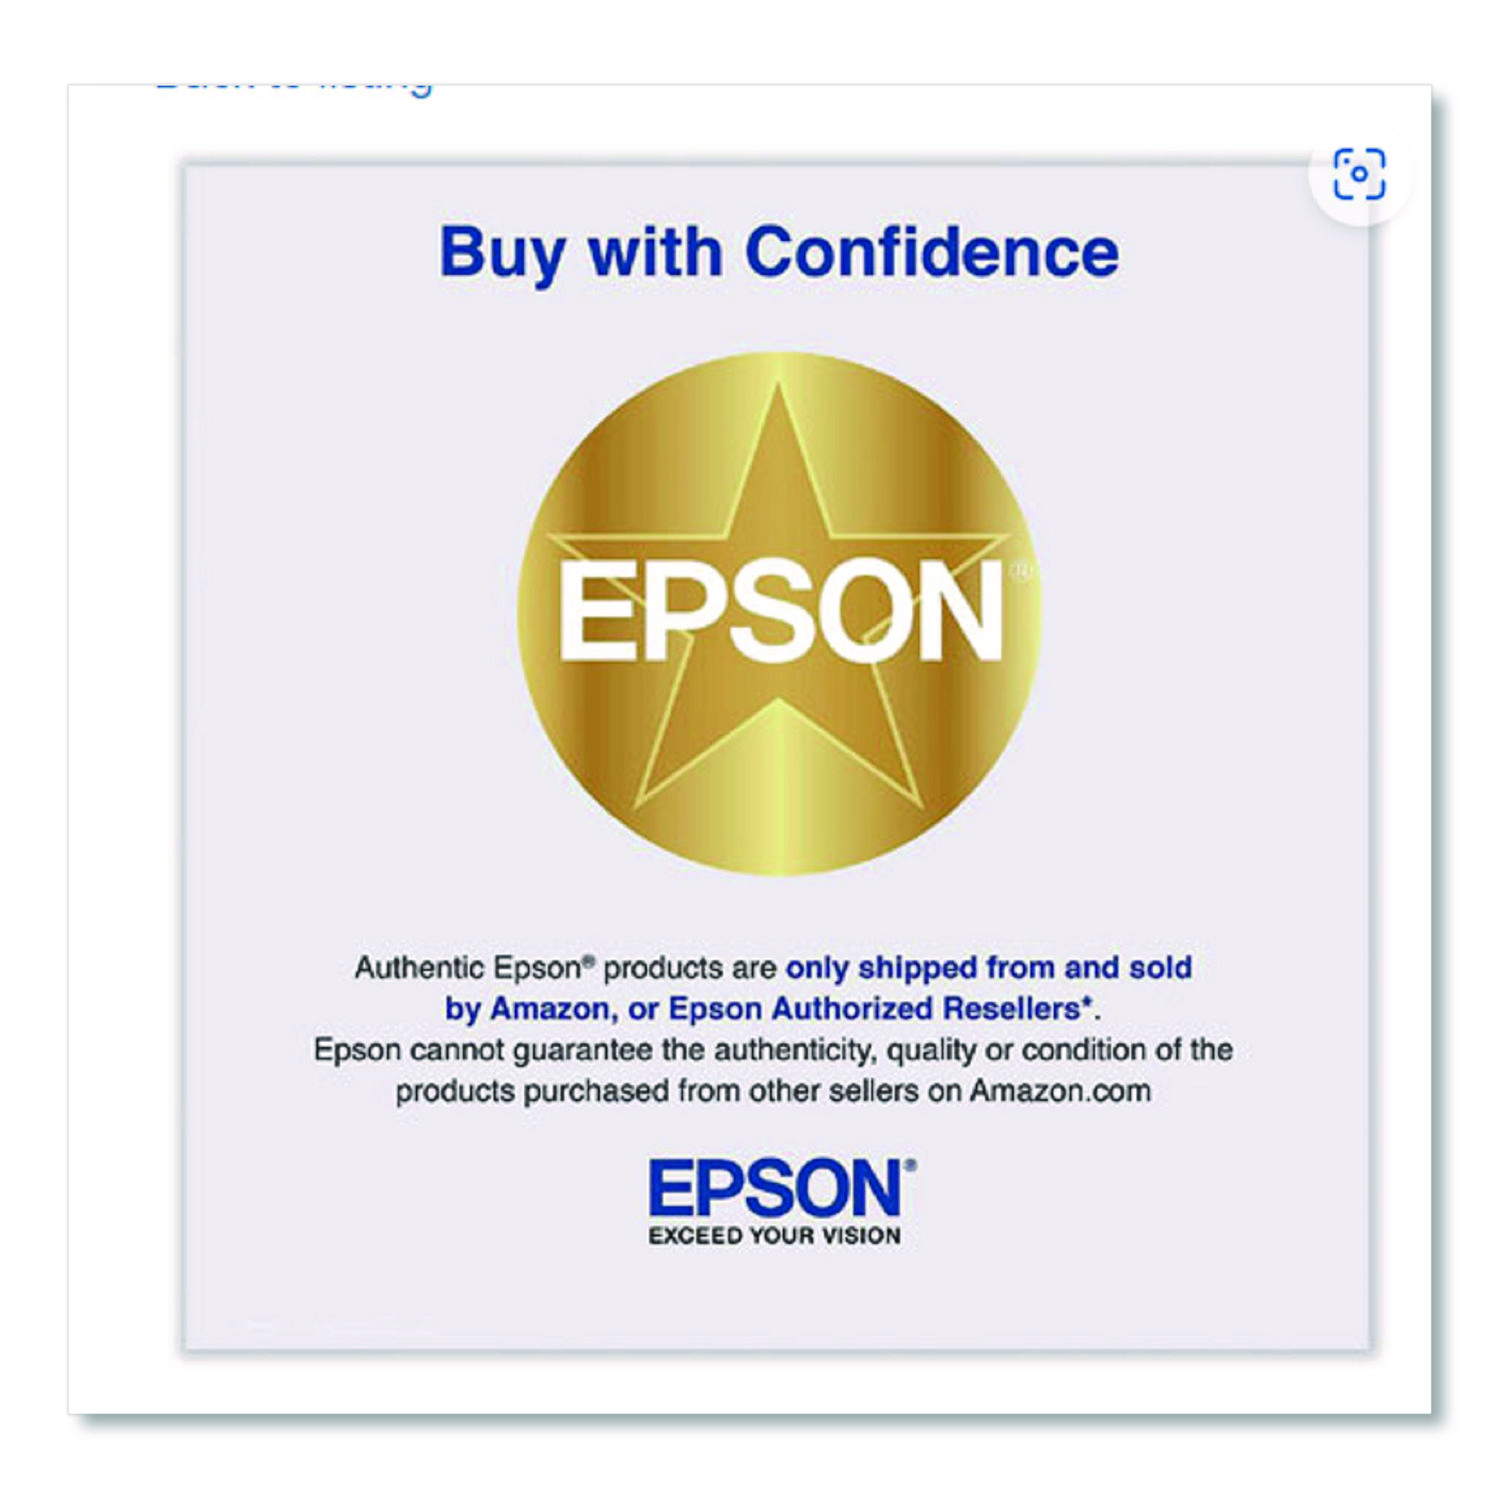 Epson EPSS041407 Luster Ultra-Premium Photo Paper, 13 x 19 - 50 pack